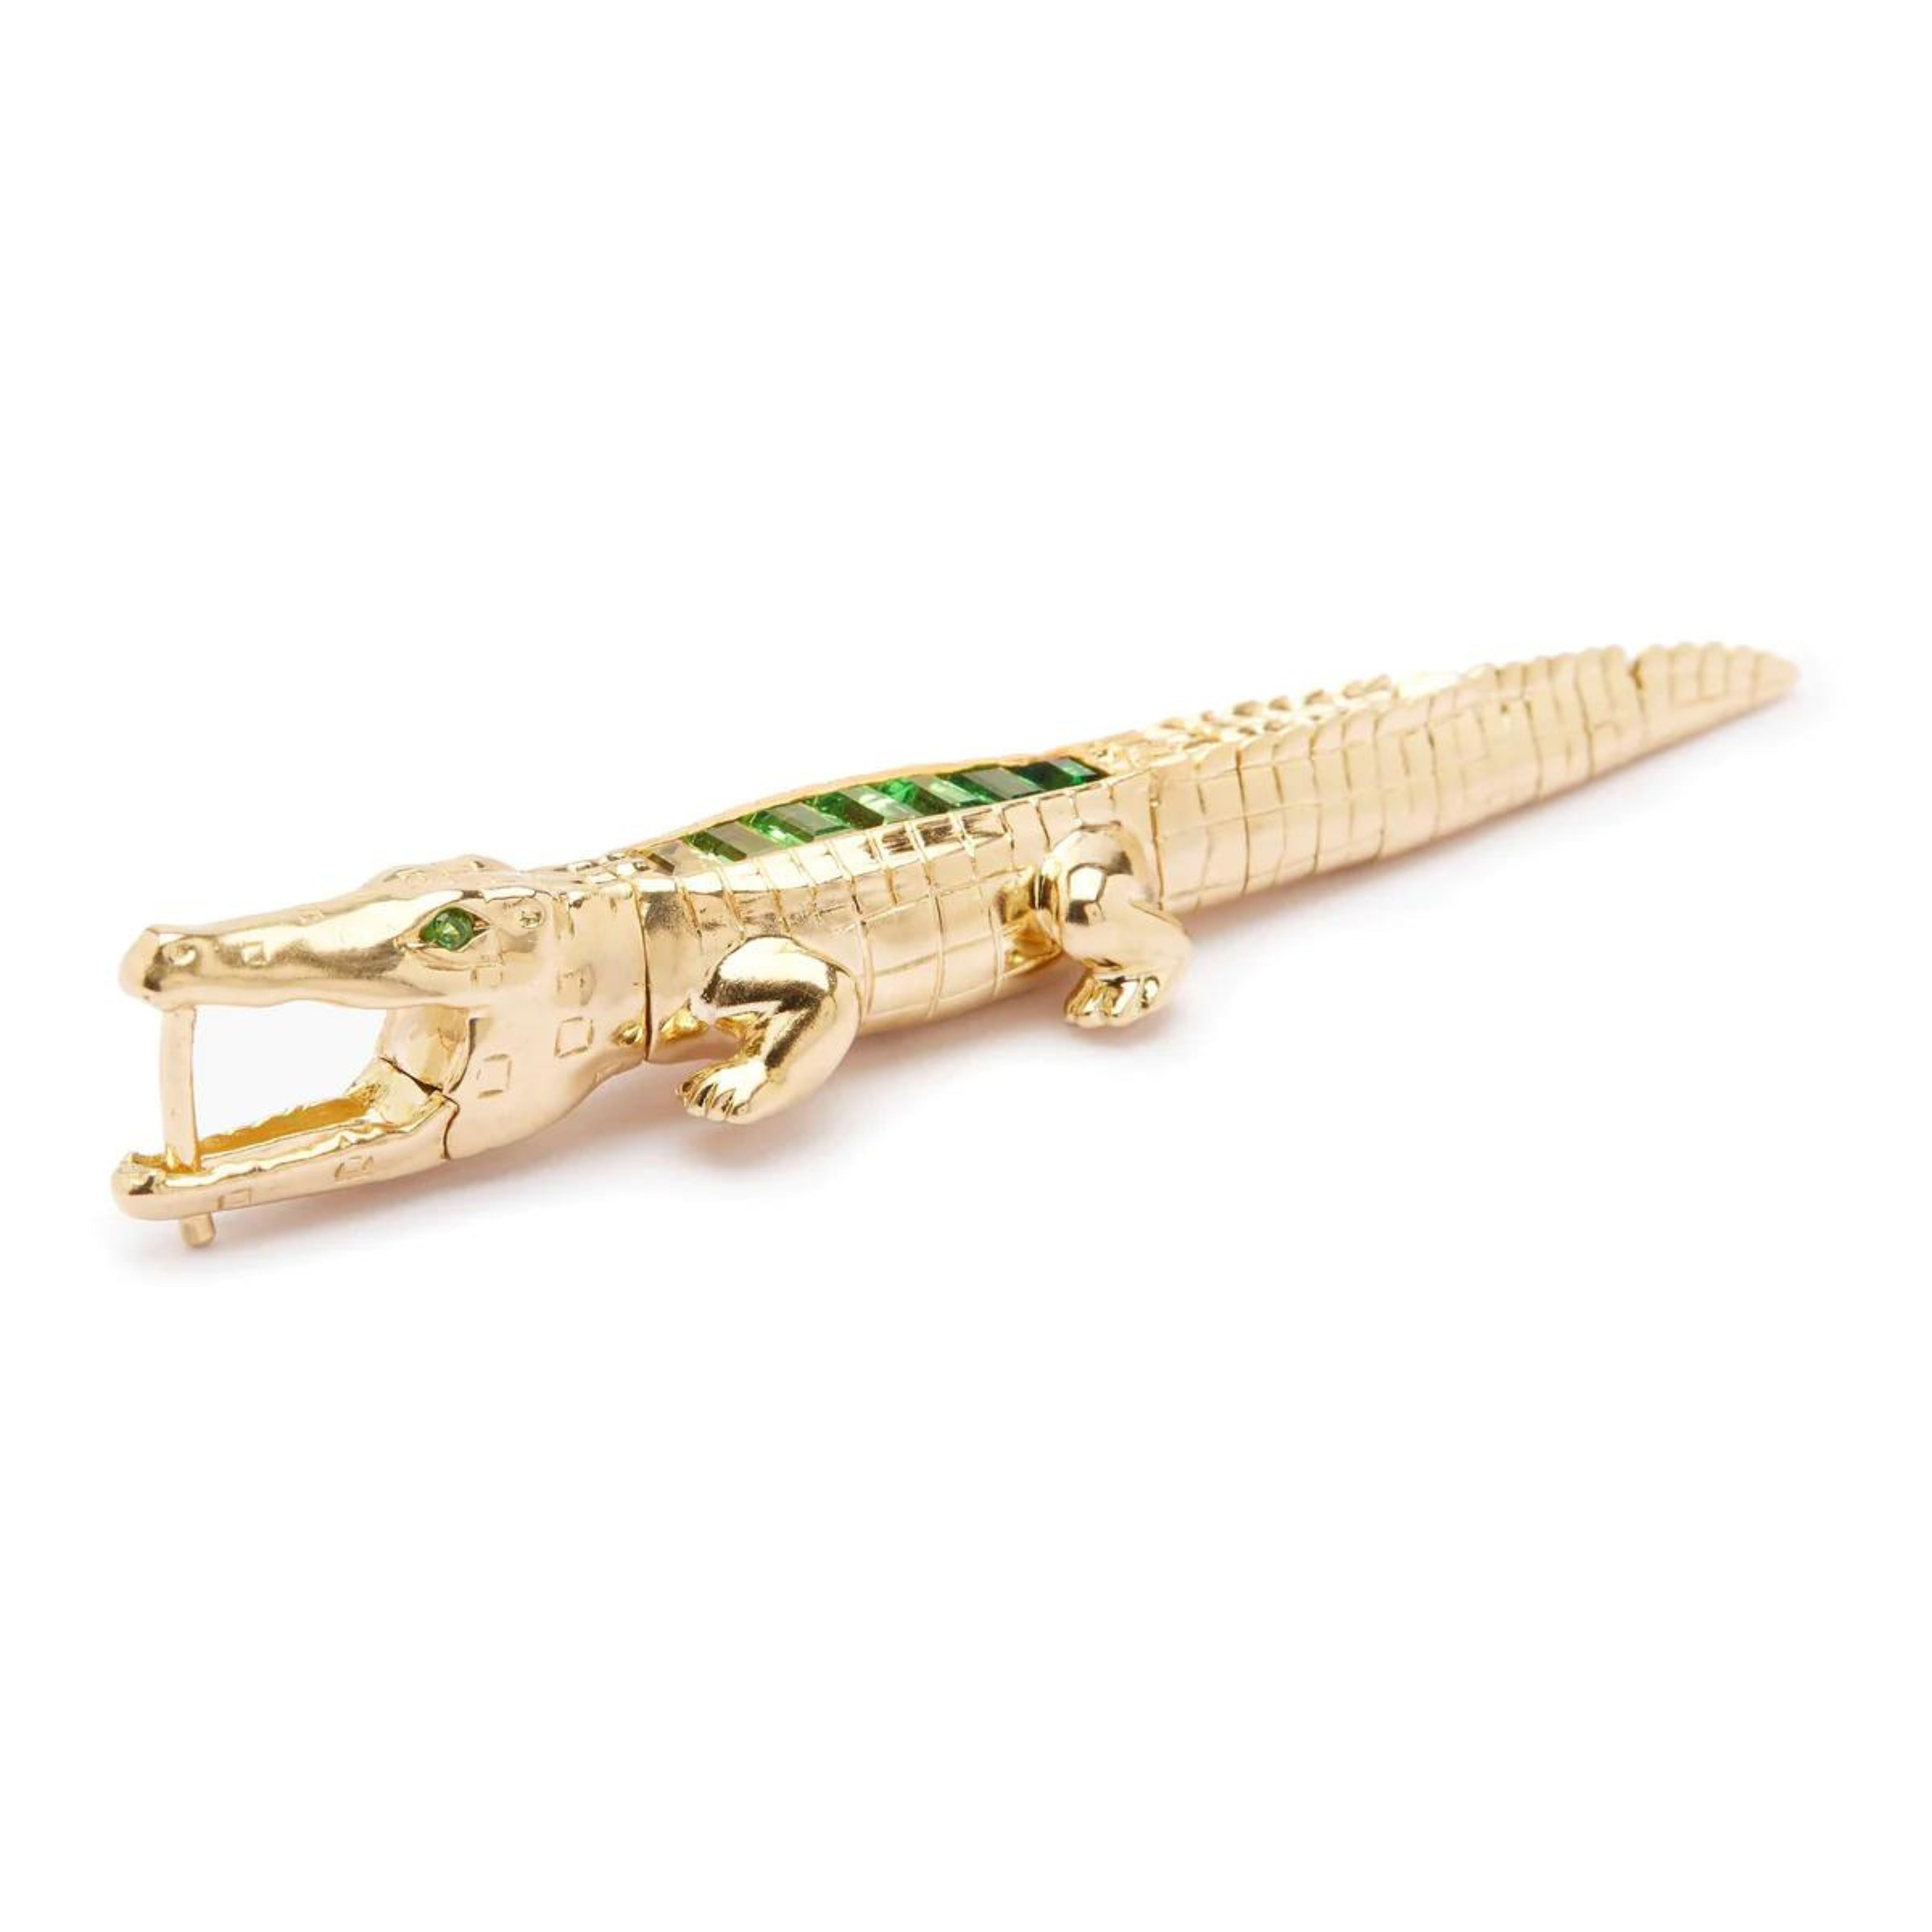 Bibi ven der Velden, Tsavorite Alligator Ear Bite Earring  Crafted in 18K yellow gold and featuring an arrangement of green tsavorites, the intricately carved design replicates an alligator&#39;s body.